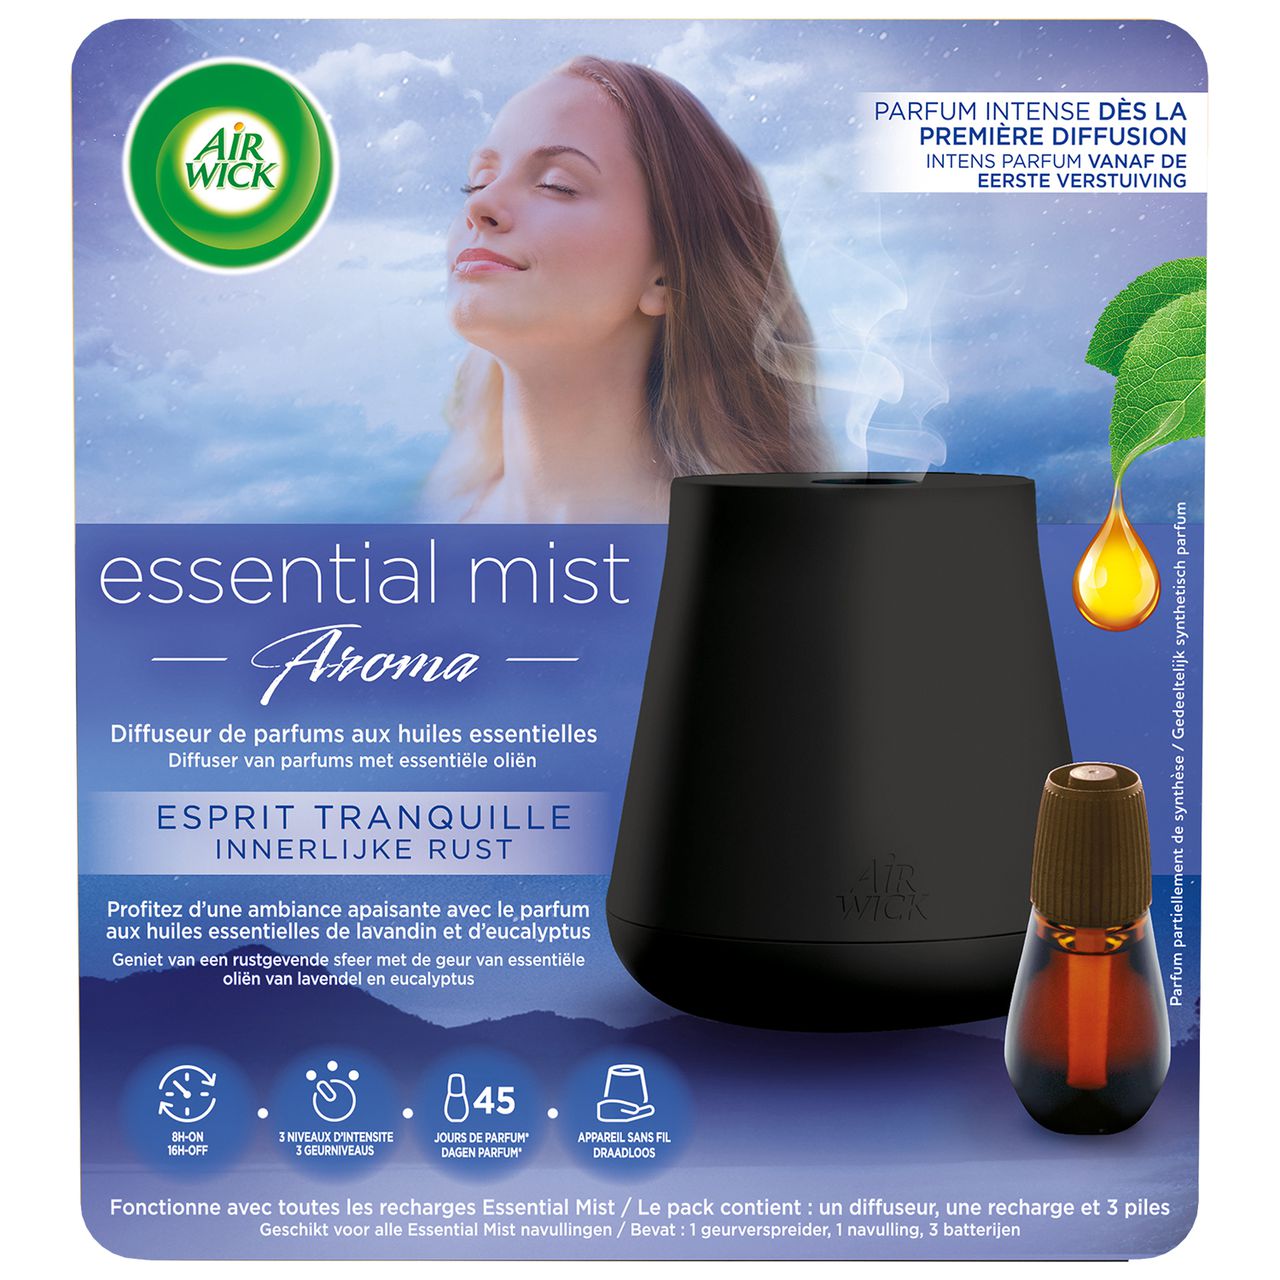 Air Wick - Comment utiliser Essential Mist ? 